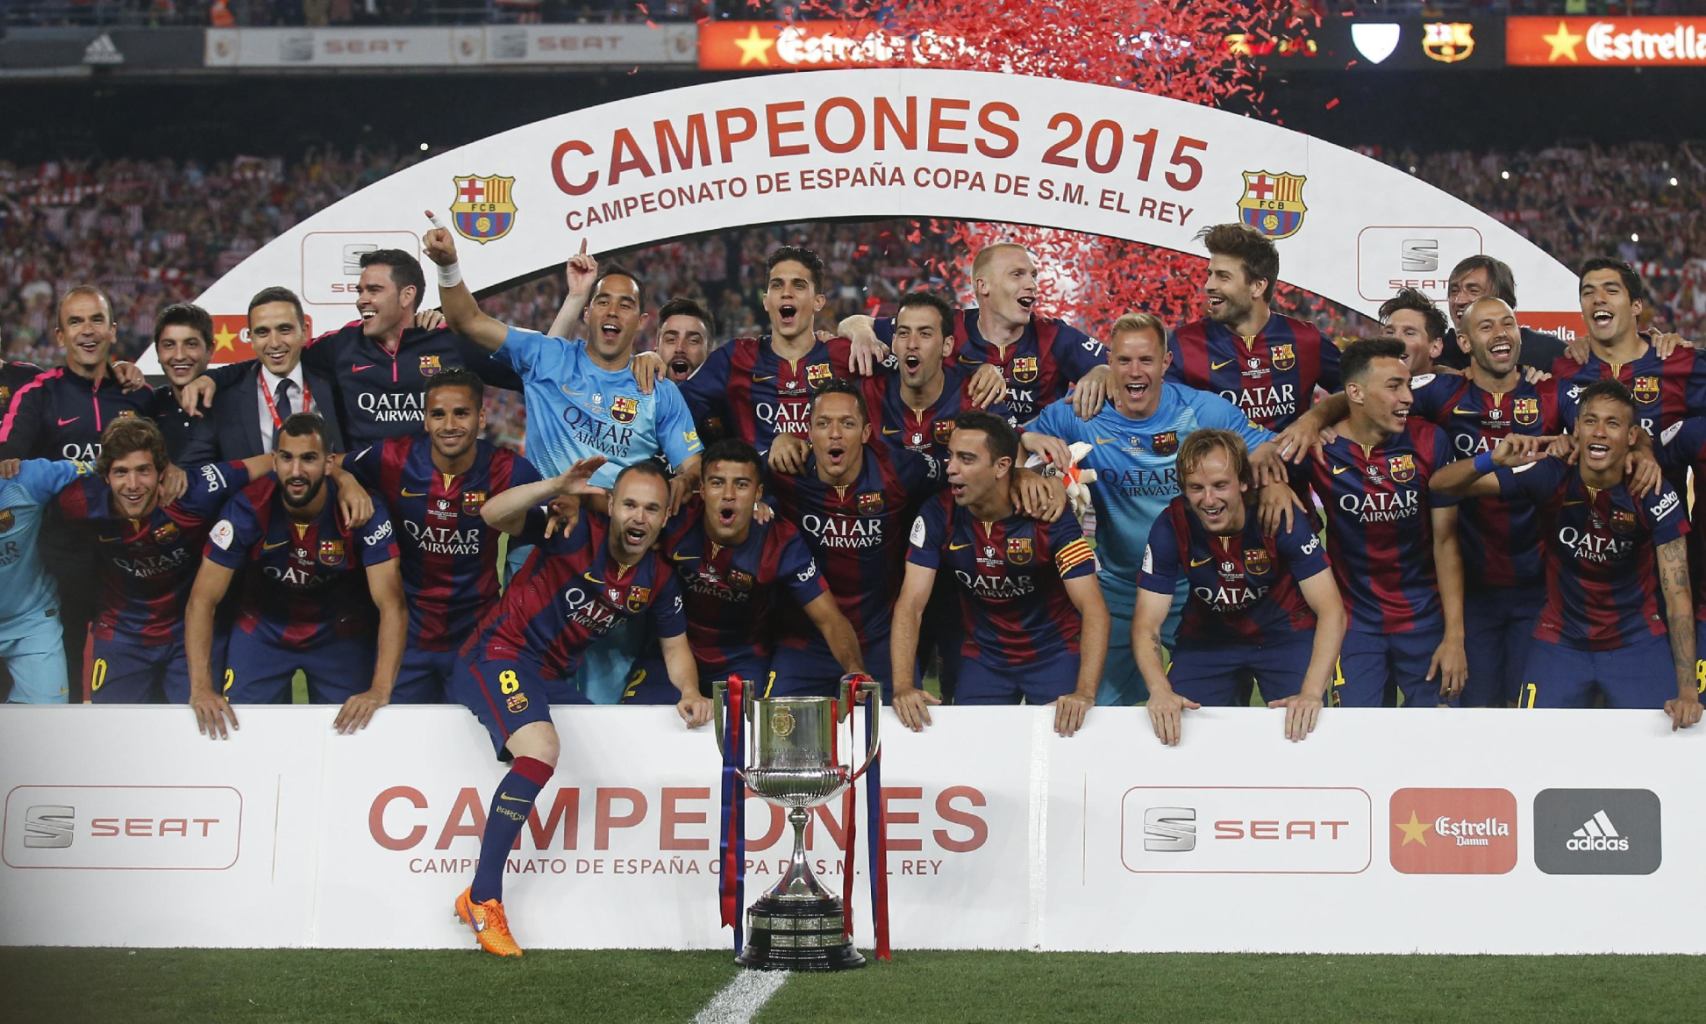 جشن قهرمانی بارسلونا در جام جذفی اسپانیا فصل 2014/15